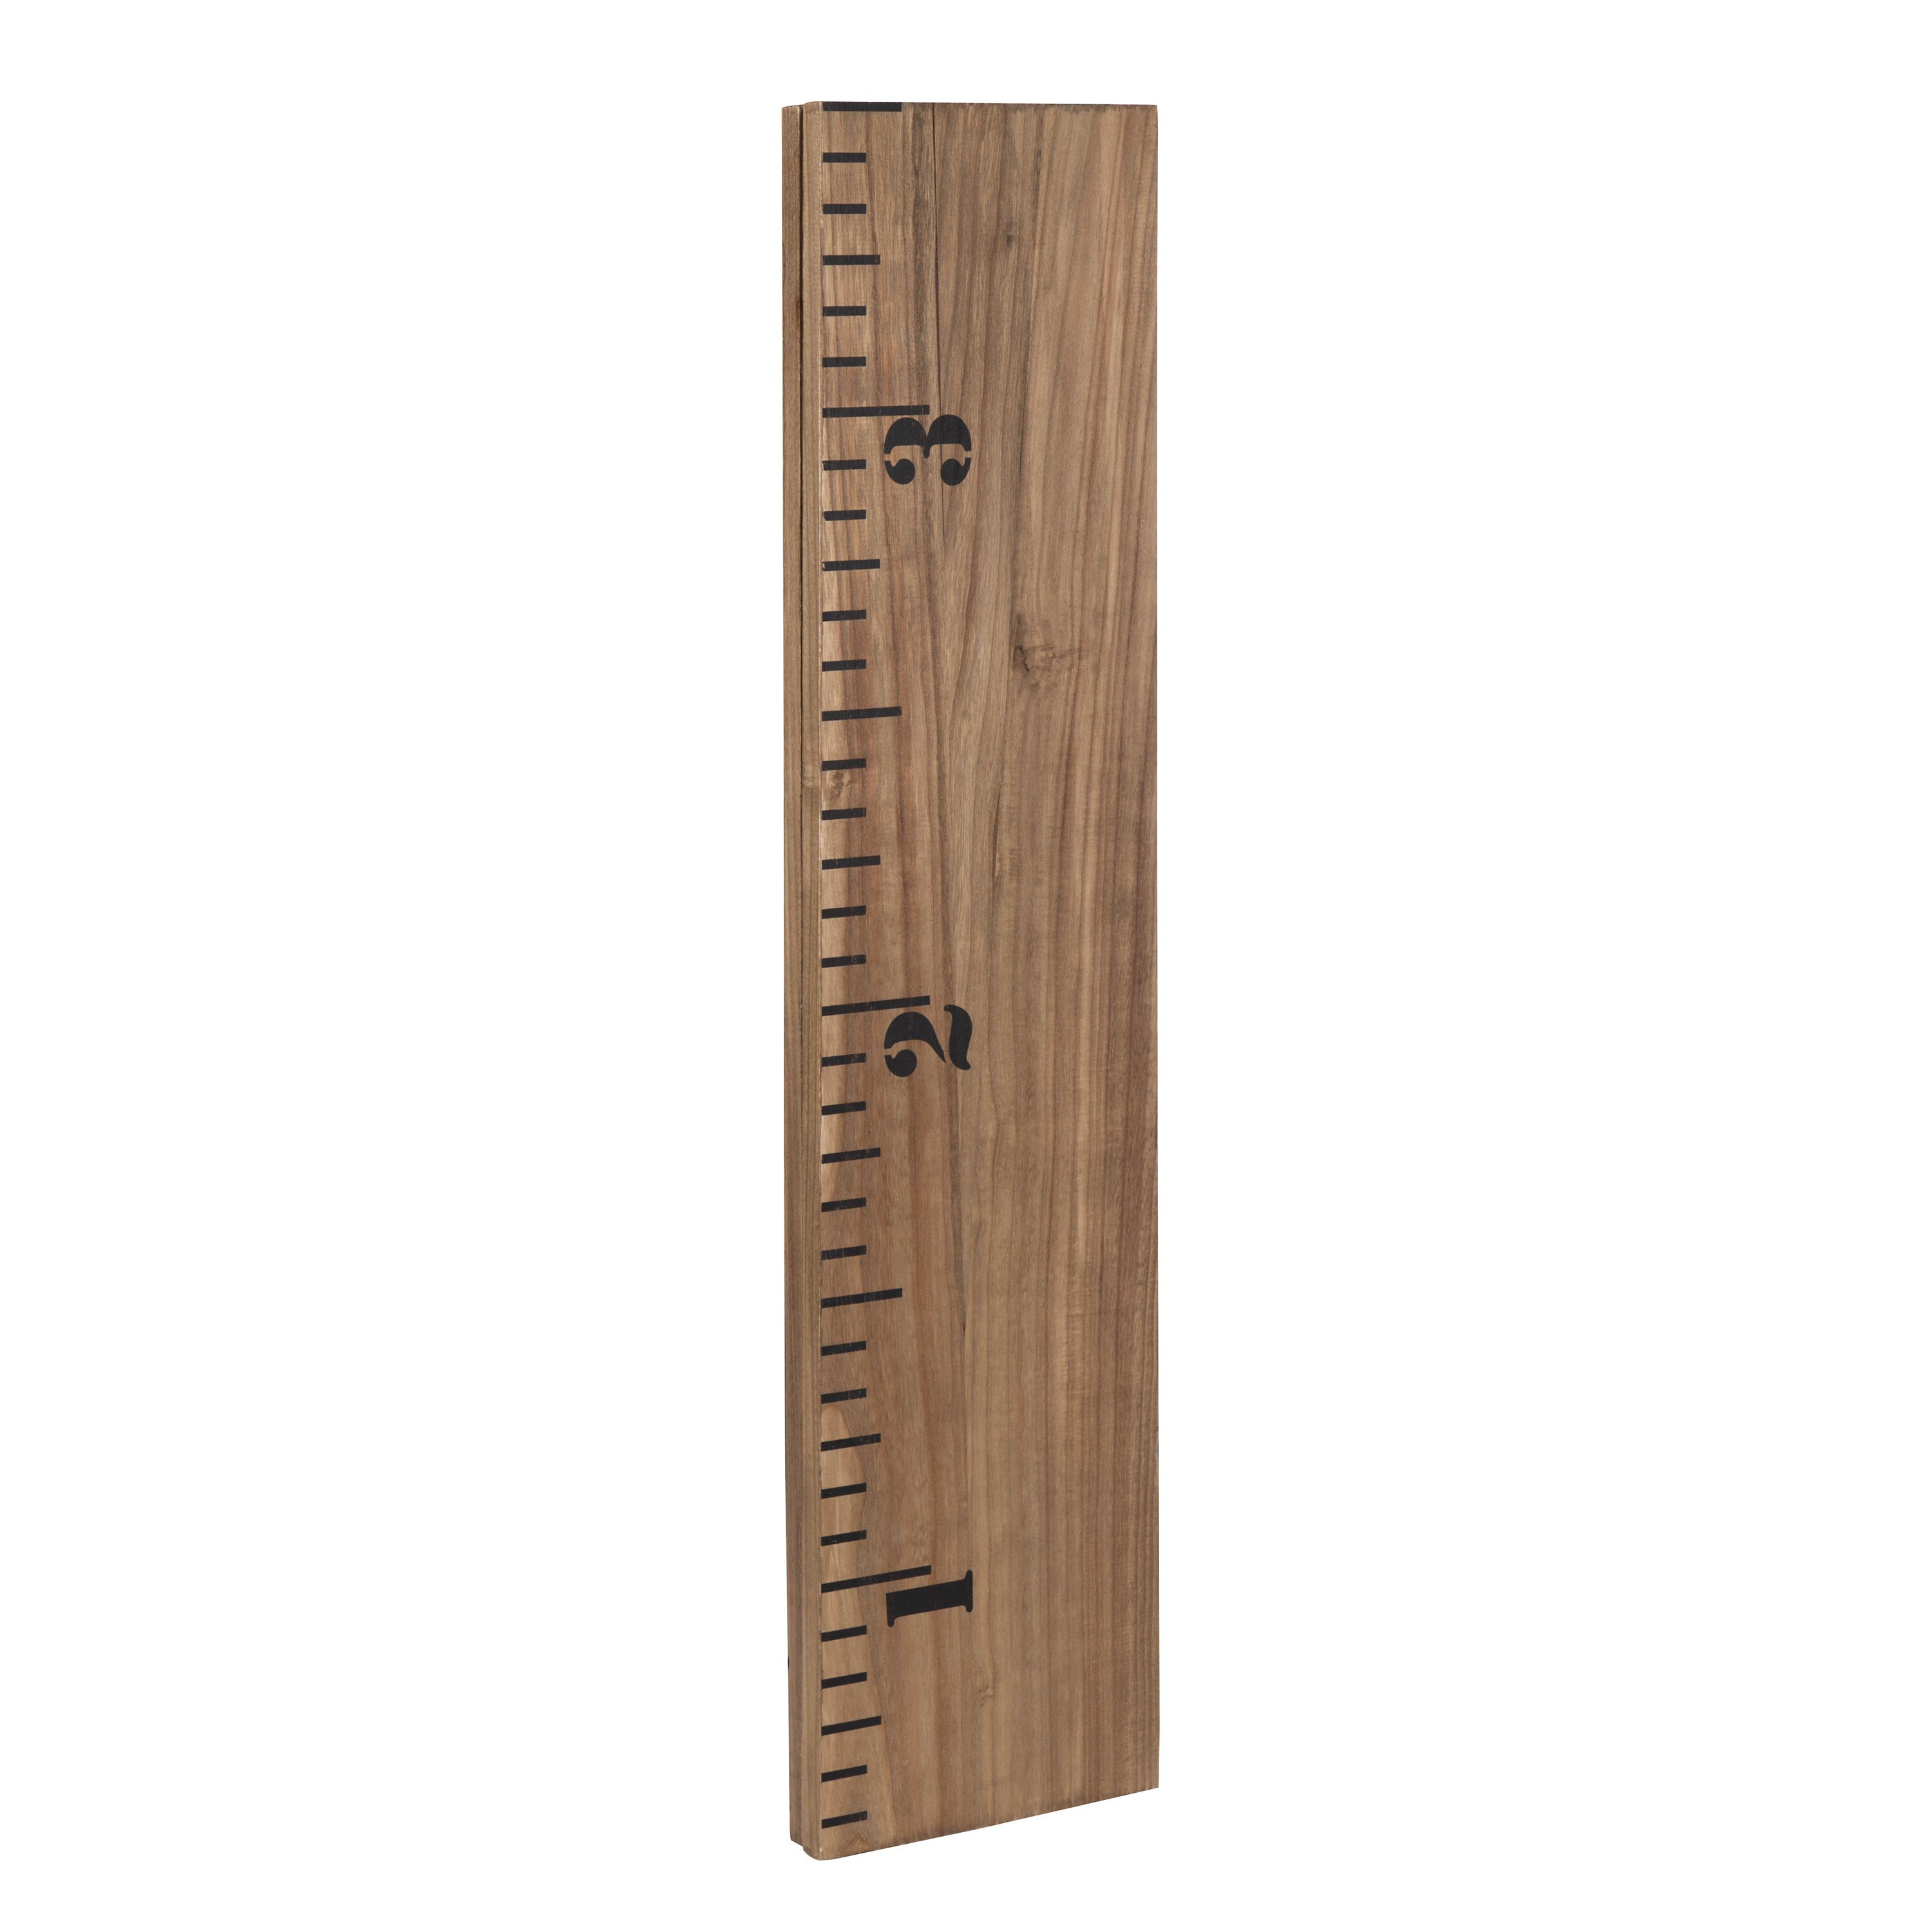 48 Wholesale Wooden Ruler, 12, 2 Pk. - at 